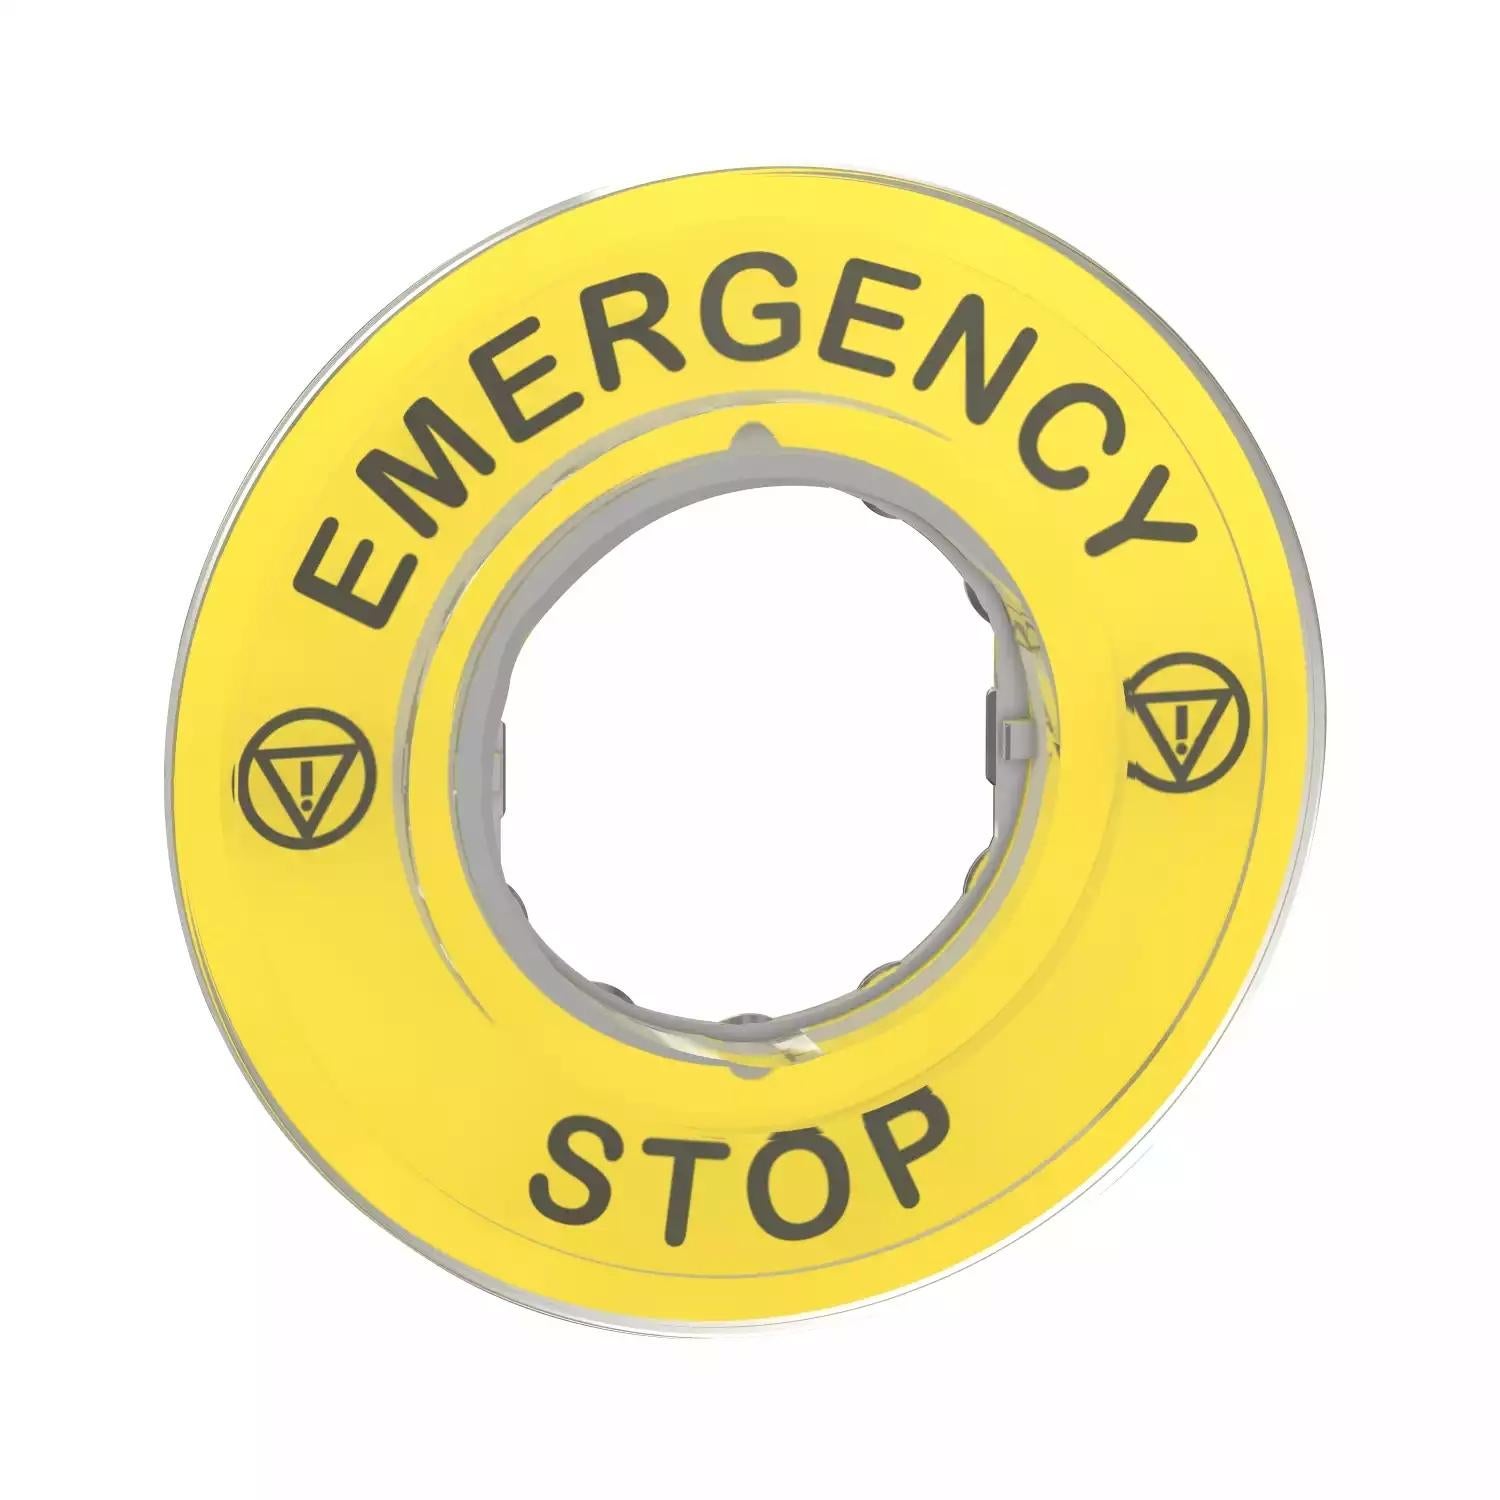 Harmony XB4, Legend holder Ø60 for emergency stop, plastic, yellow, marked EMERGENCY STOP